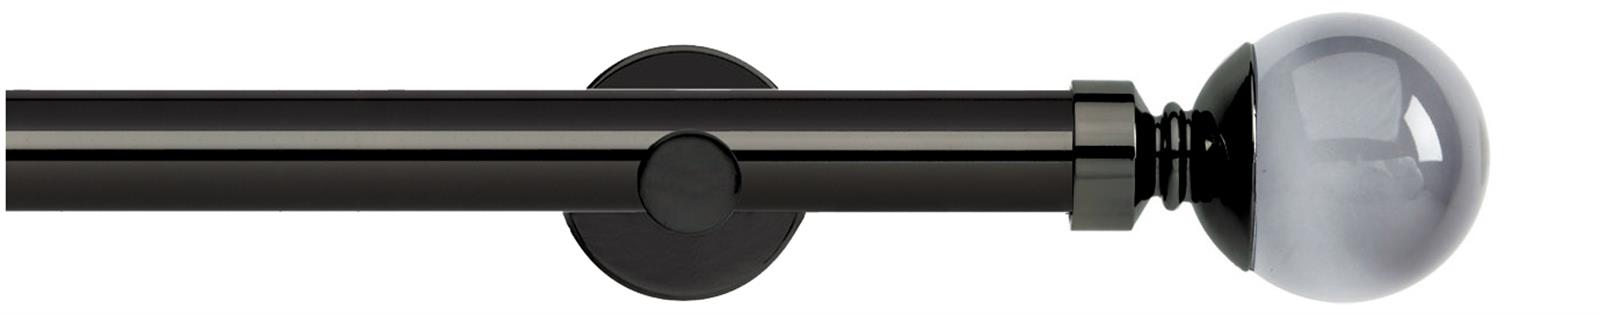 Neo Premium 28mm Eyelet Pole Black Nickel Cylinder Smoke Grey Ball